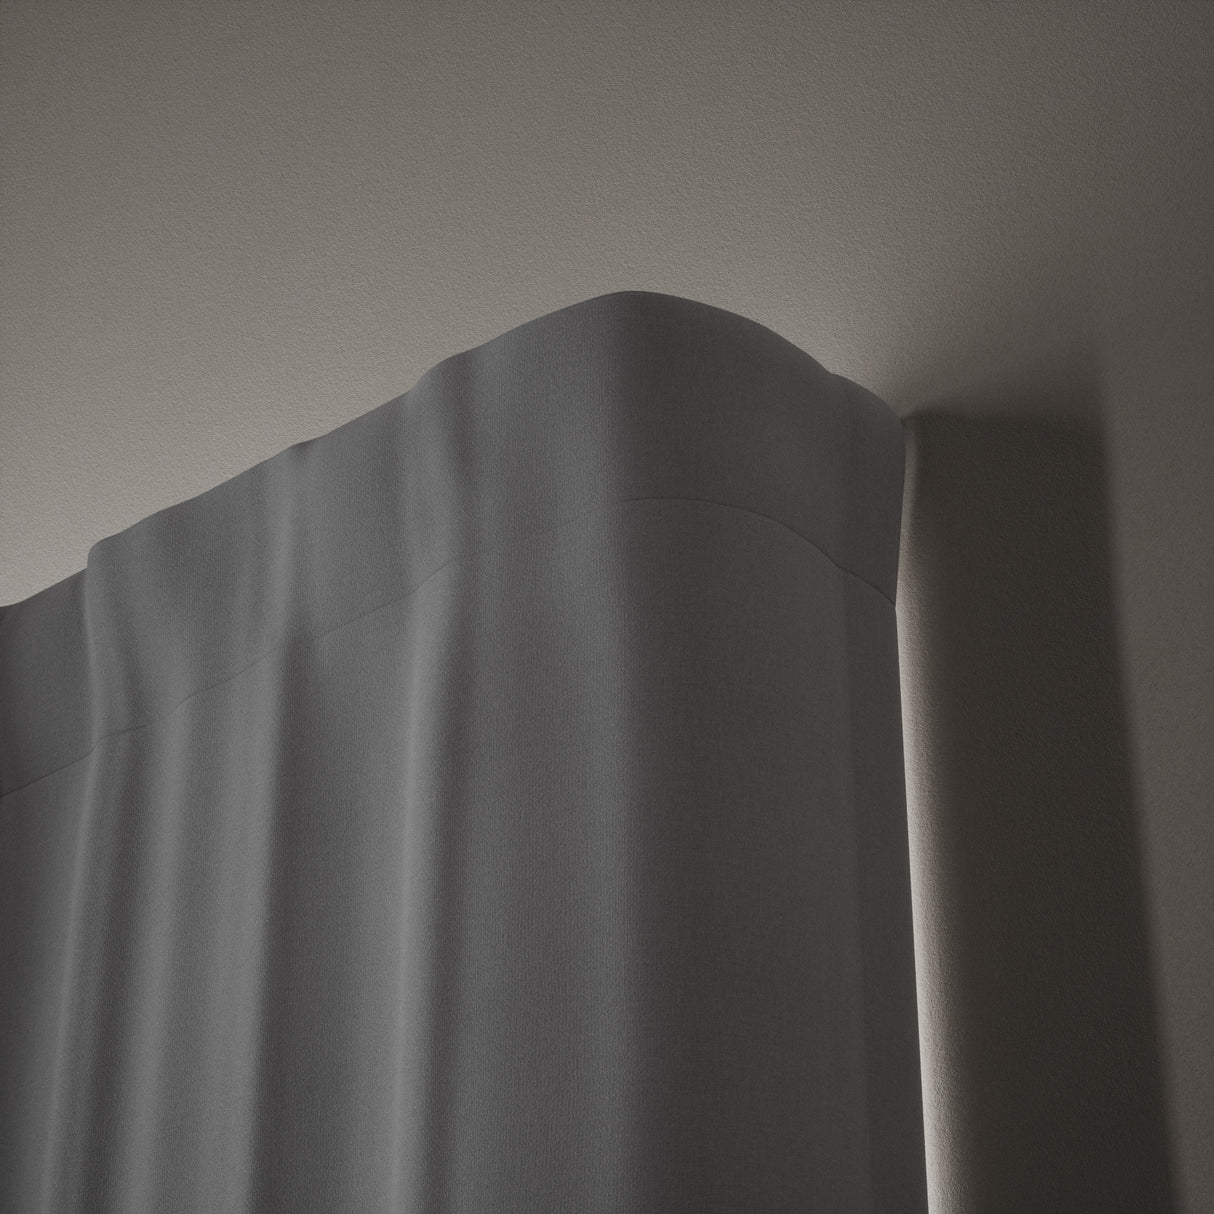 Twilight Single Room Darkening Curtain Rod